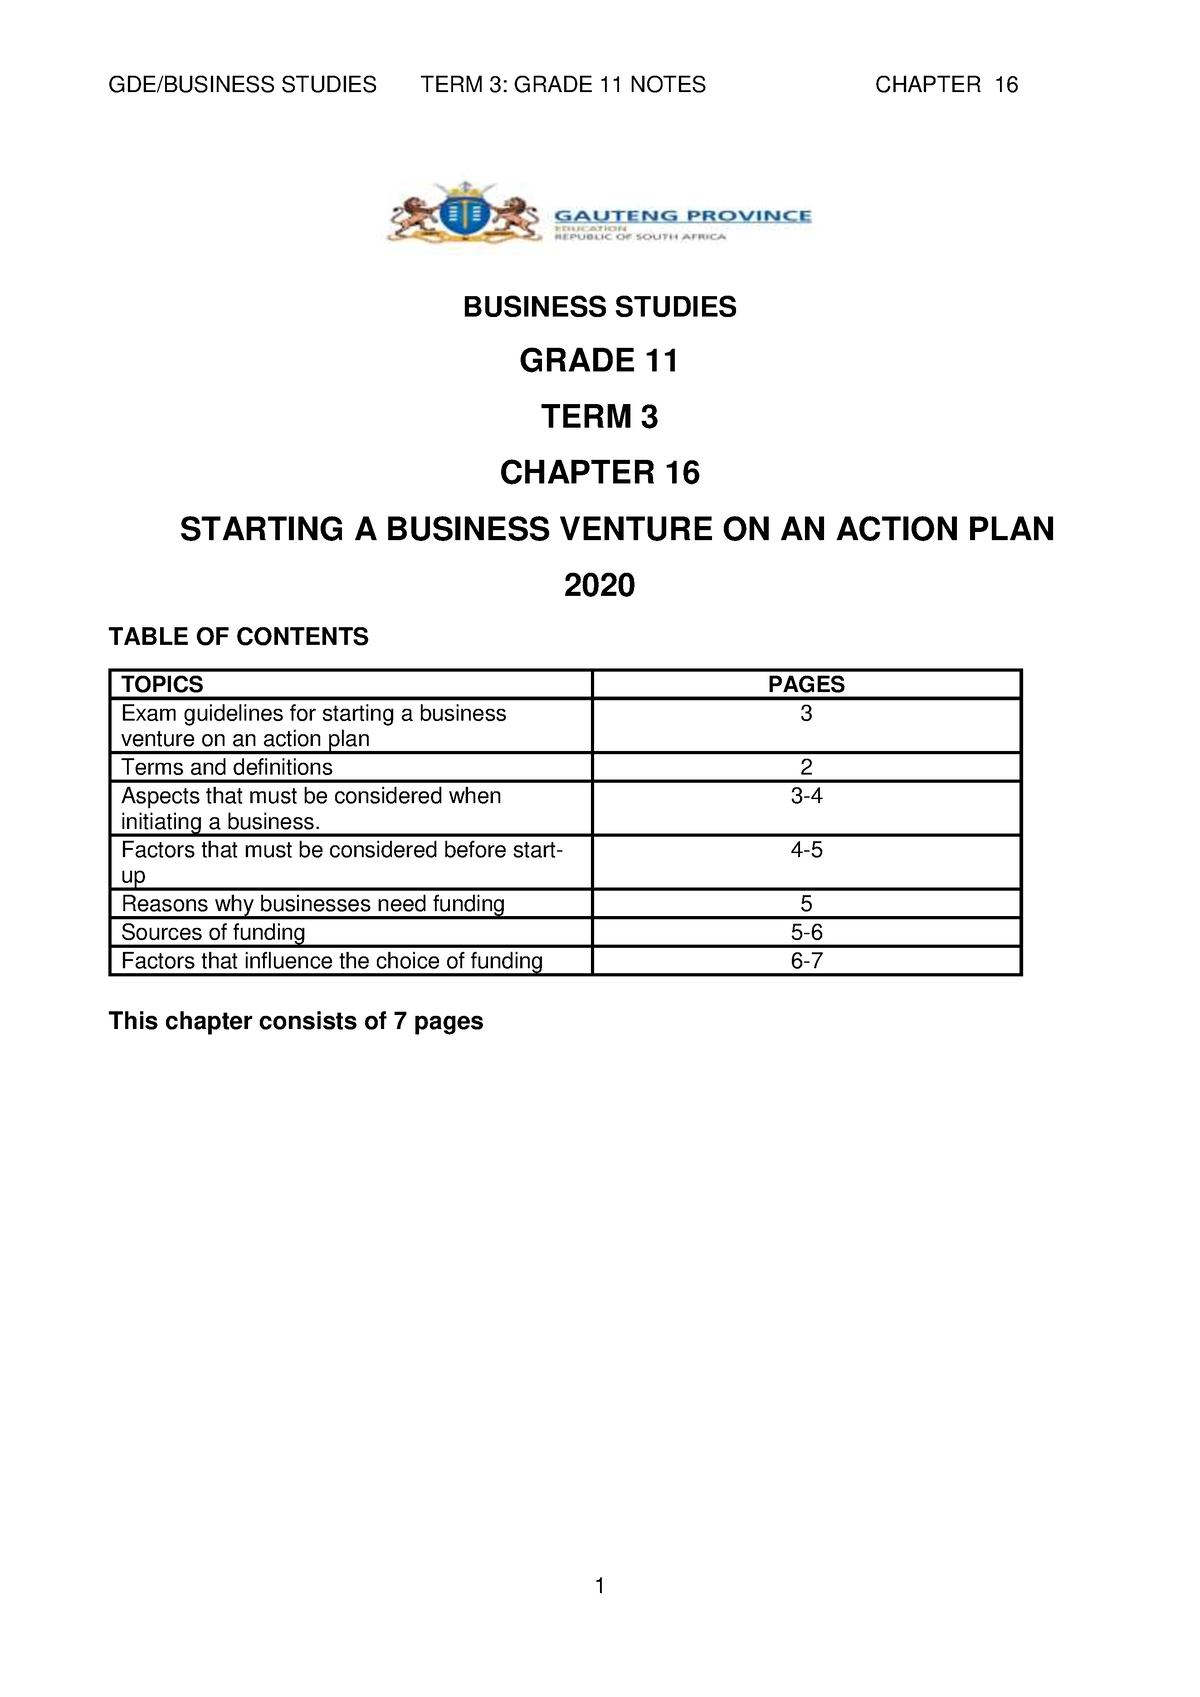 business studies essay grade 11 term 3